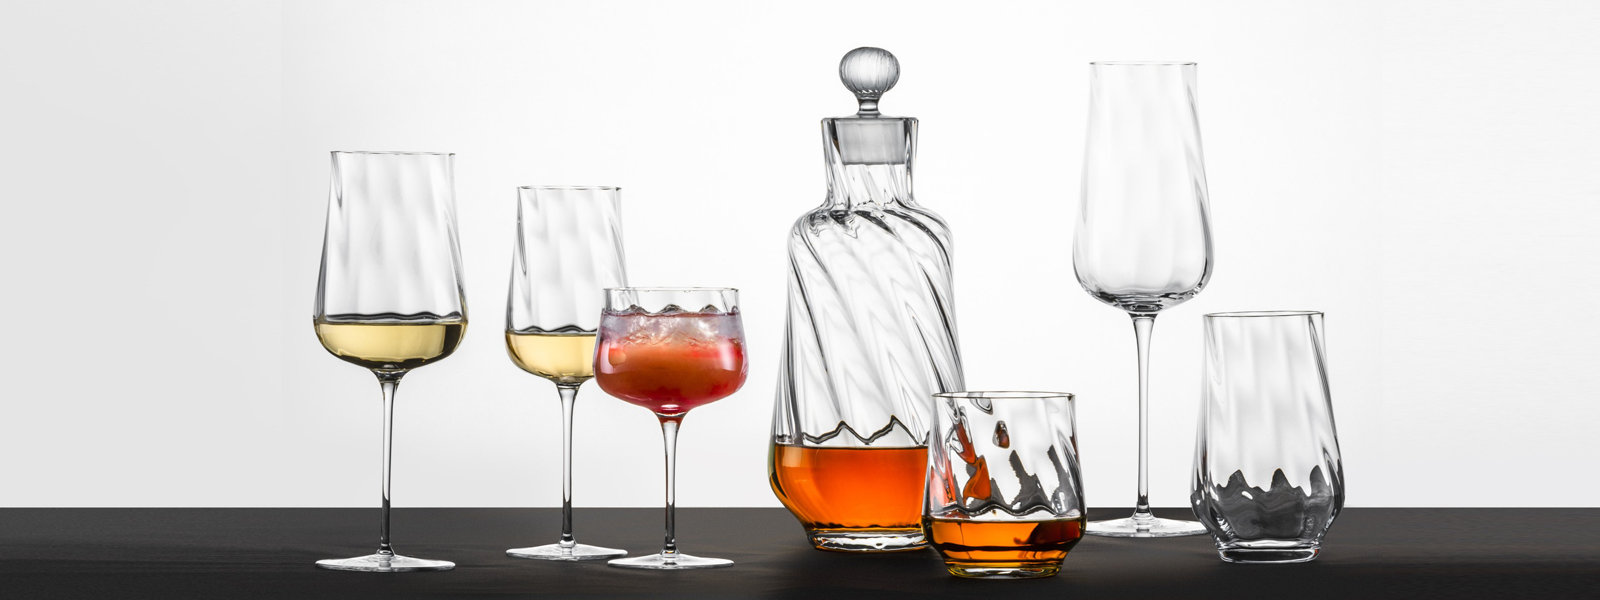 Schott Zwiesel Tritan Bar Special Whiskey Nosing Glass, Clear